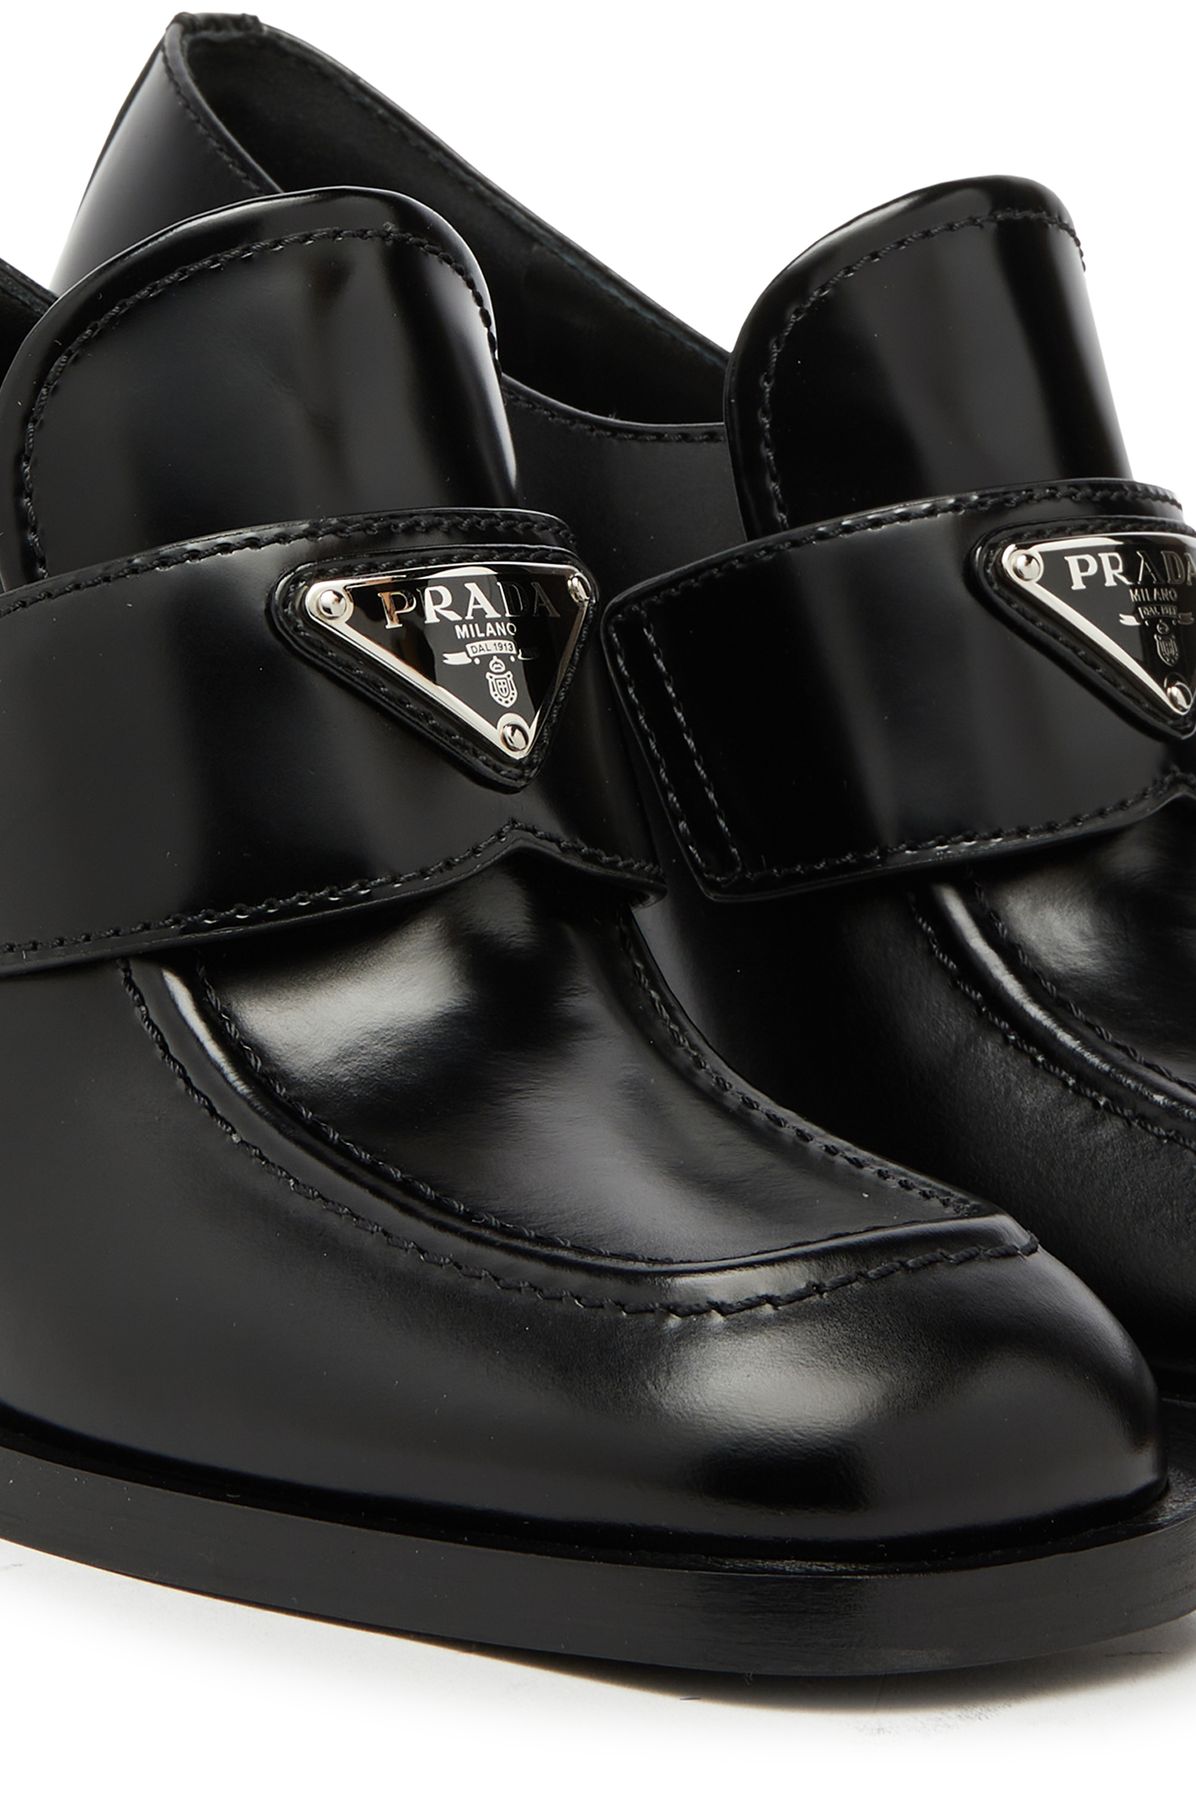 Prada High-heeled suede loafers